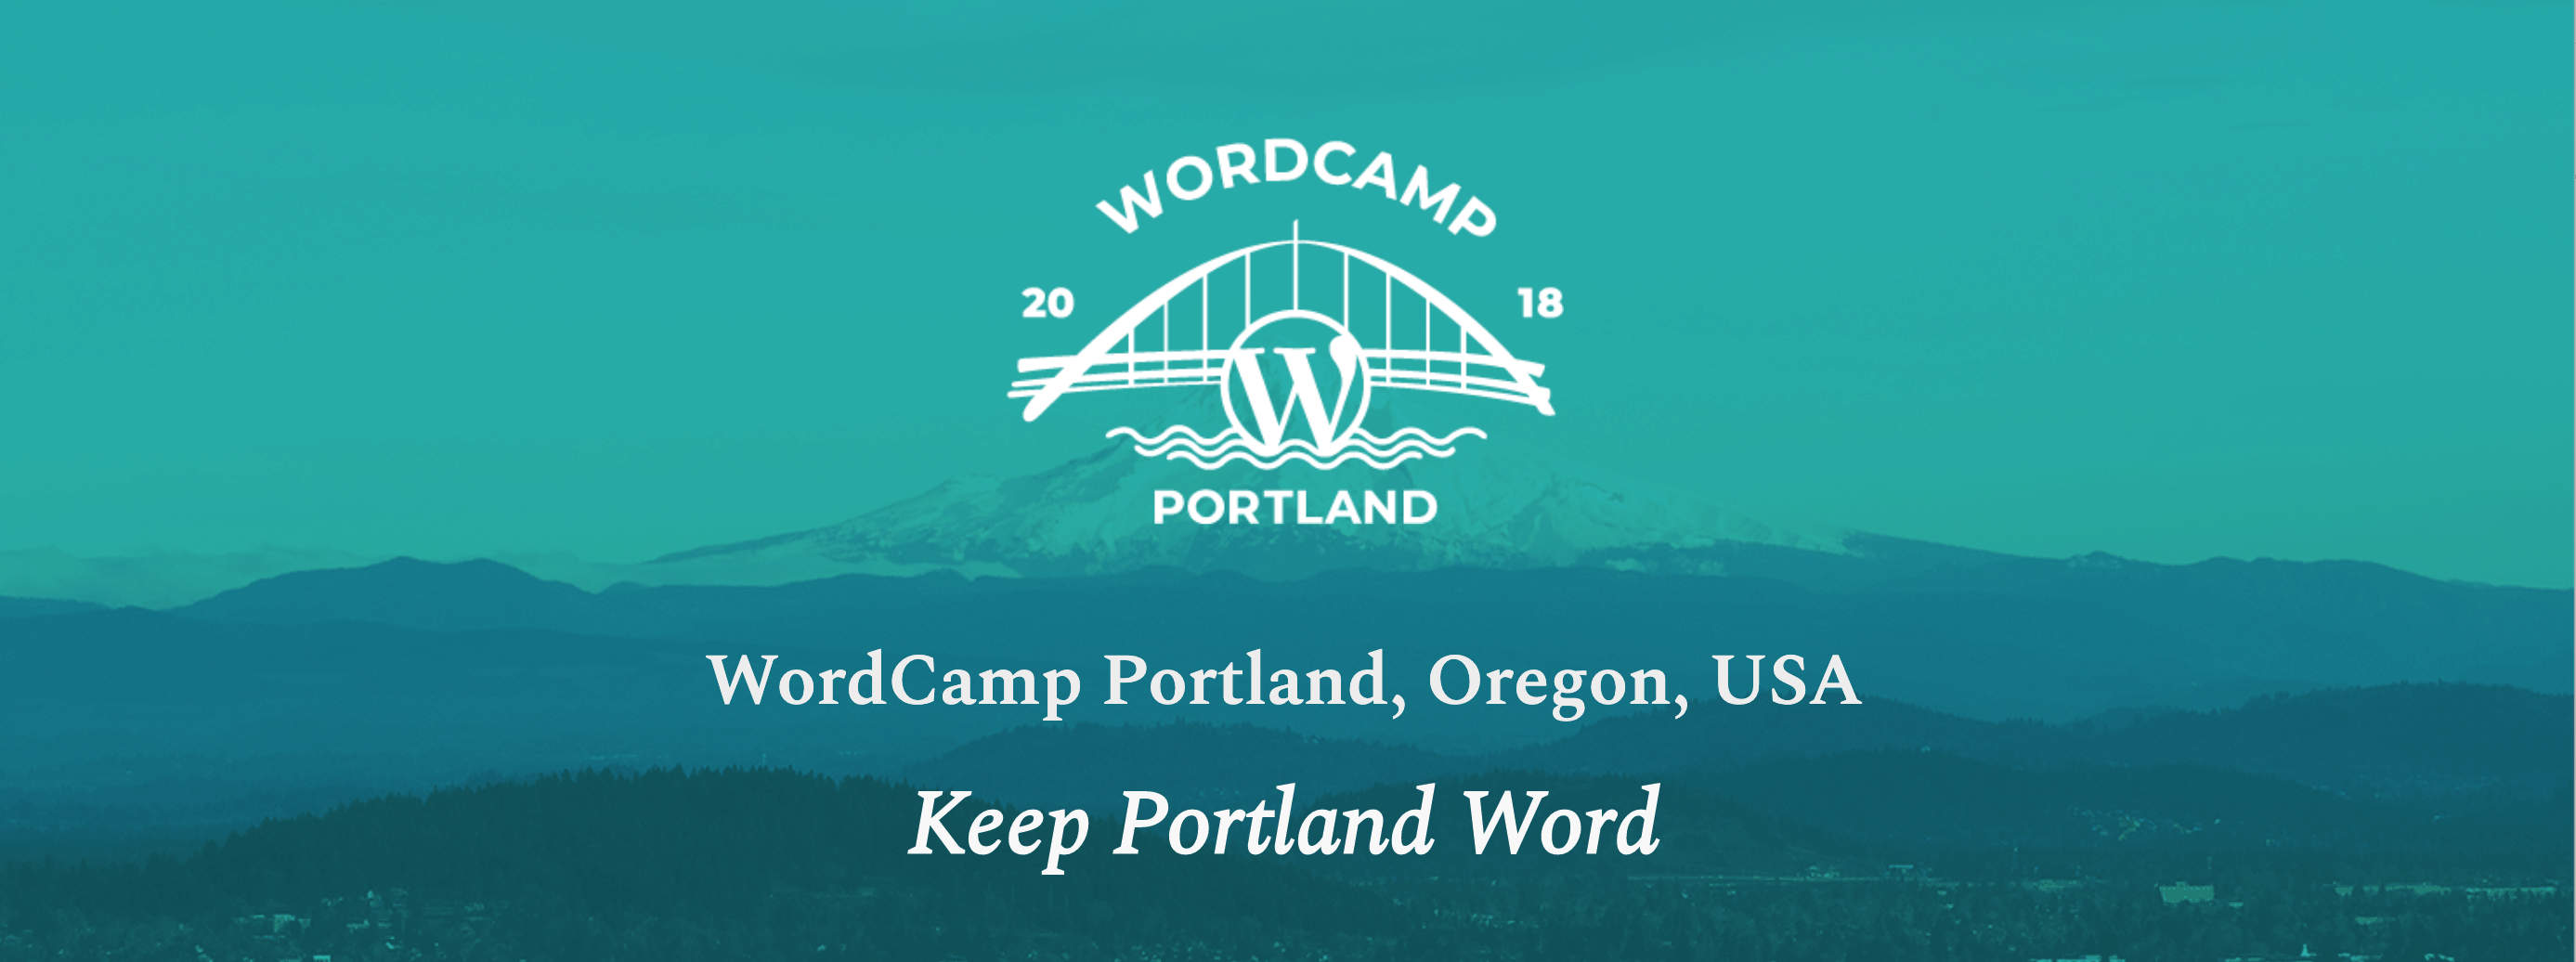 Portland Wordcamp 2018